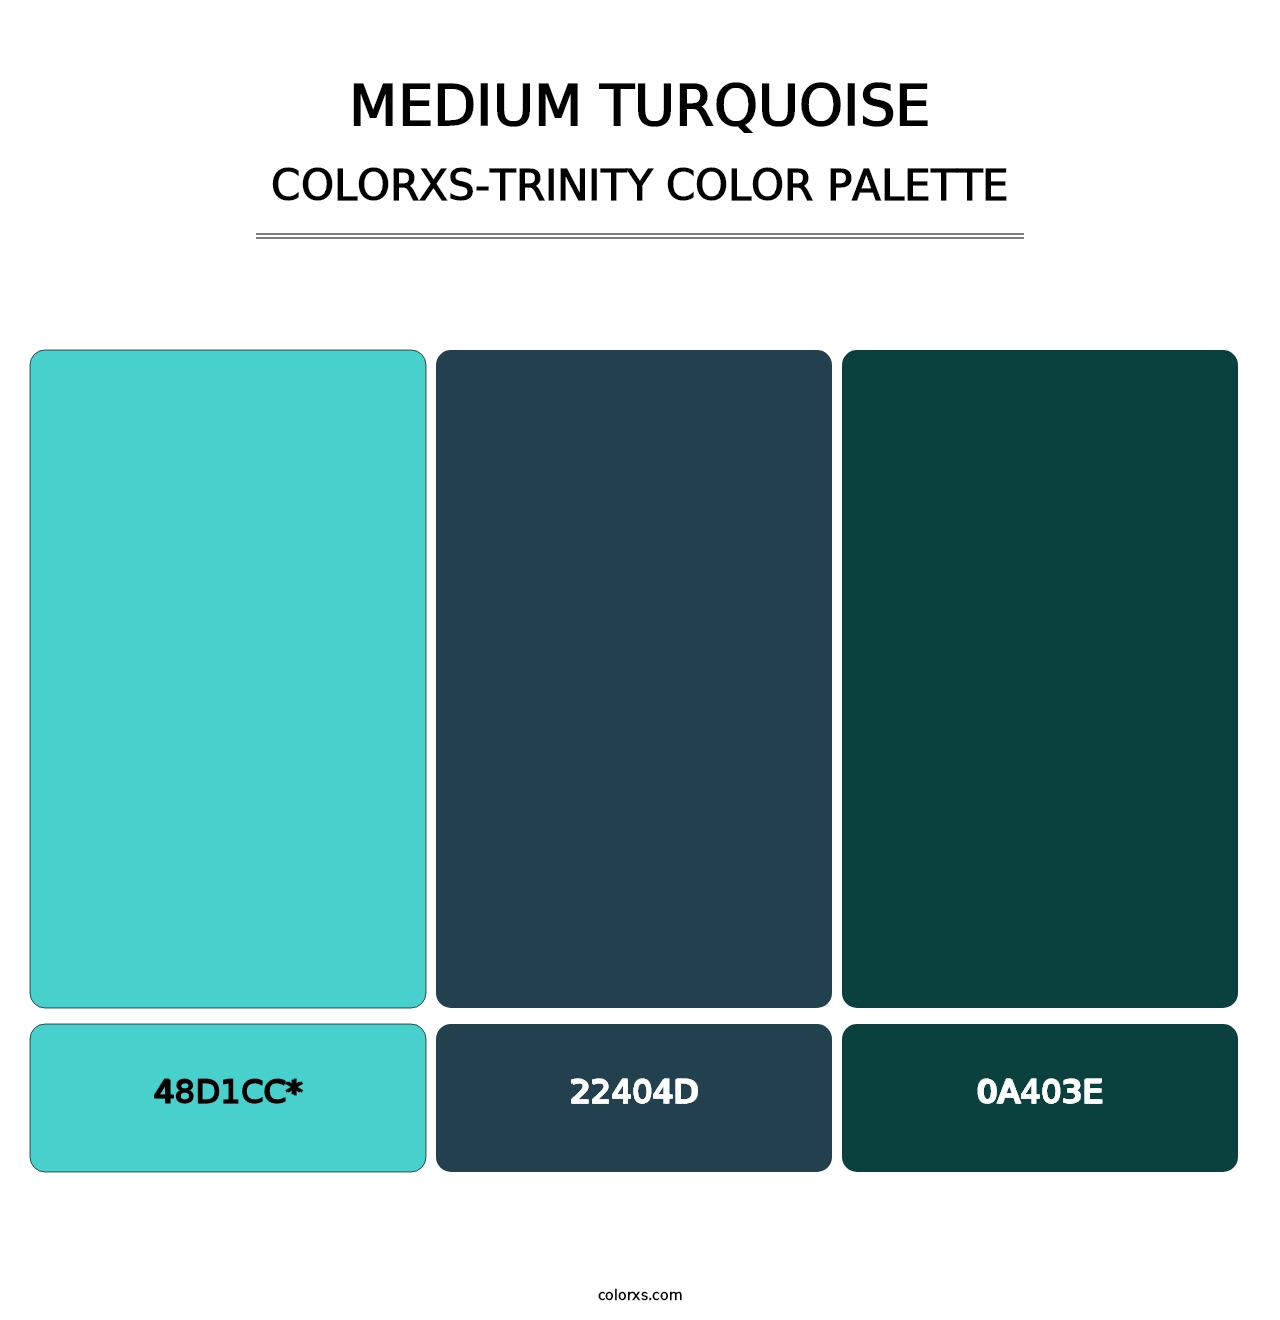 Medium Turquoise - Colorxs Trinity Palette